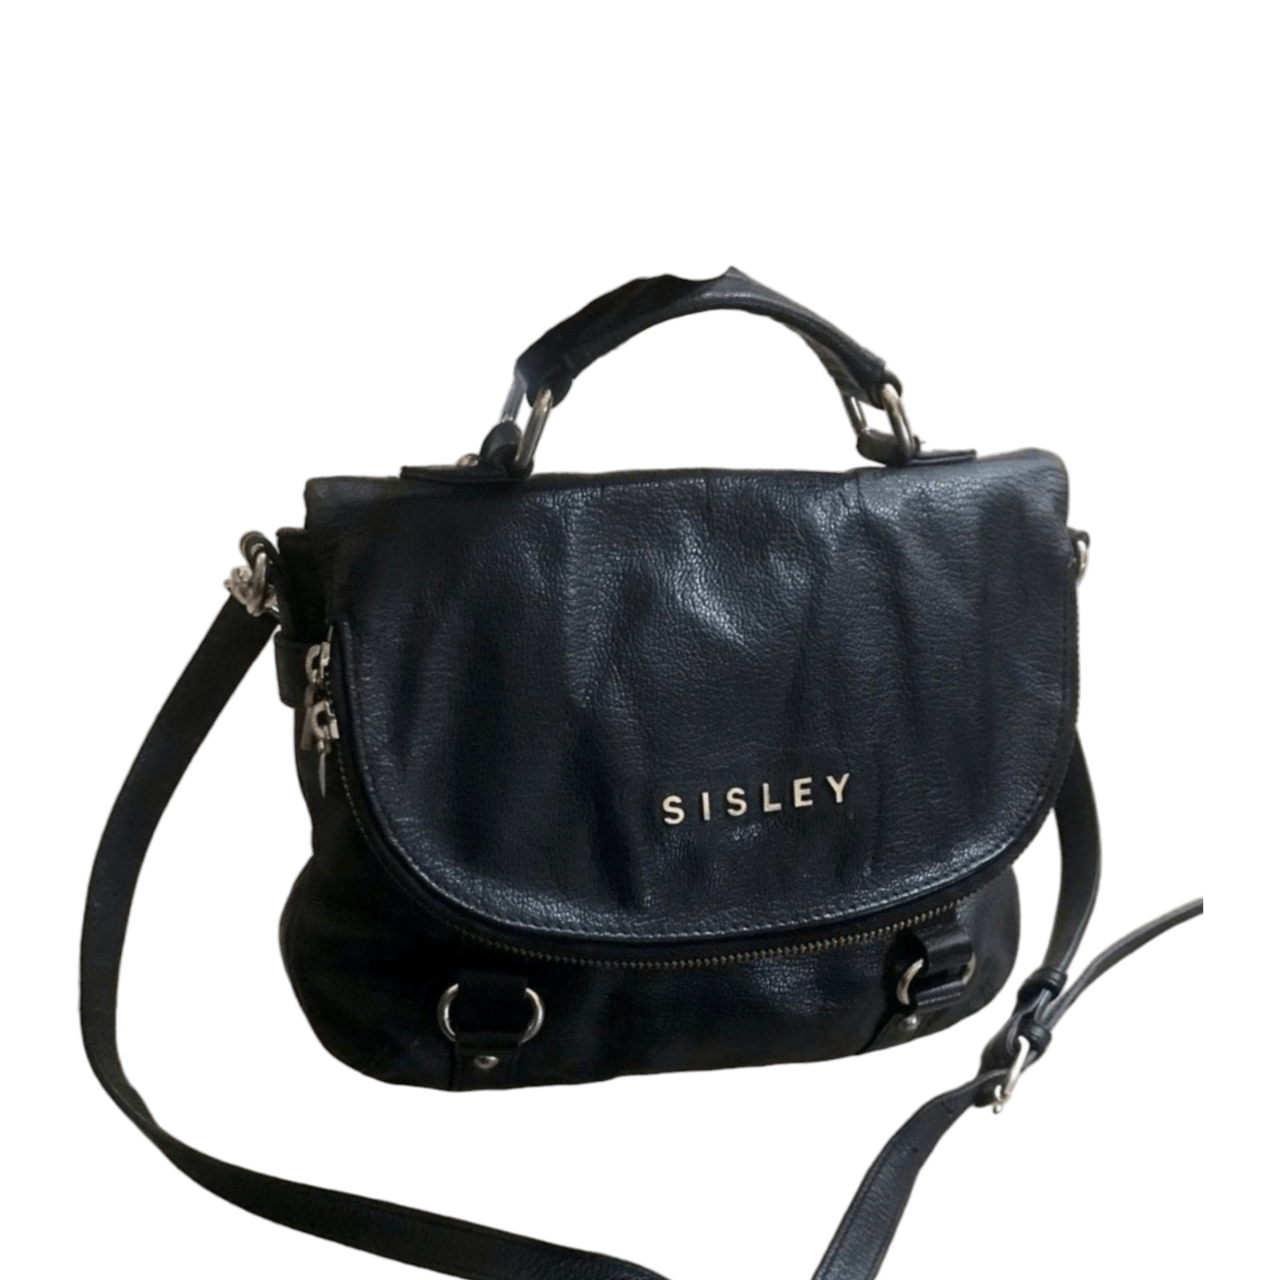 Sisley Black Satchel